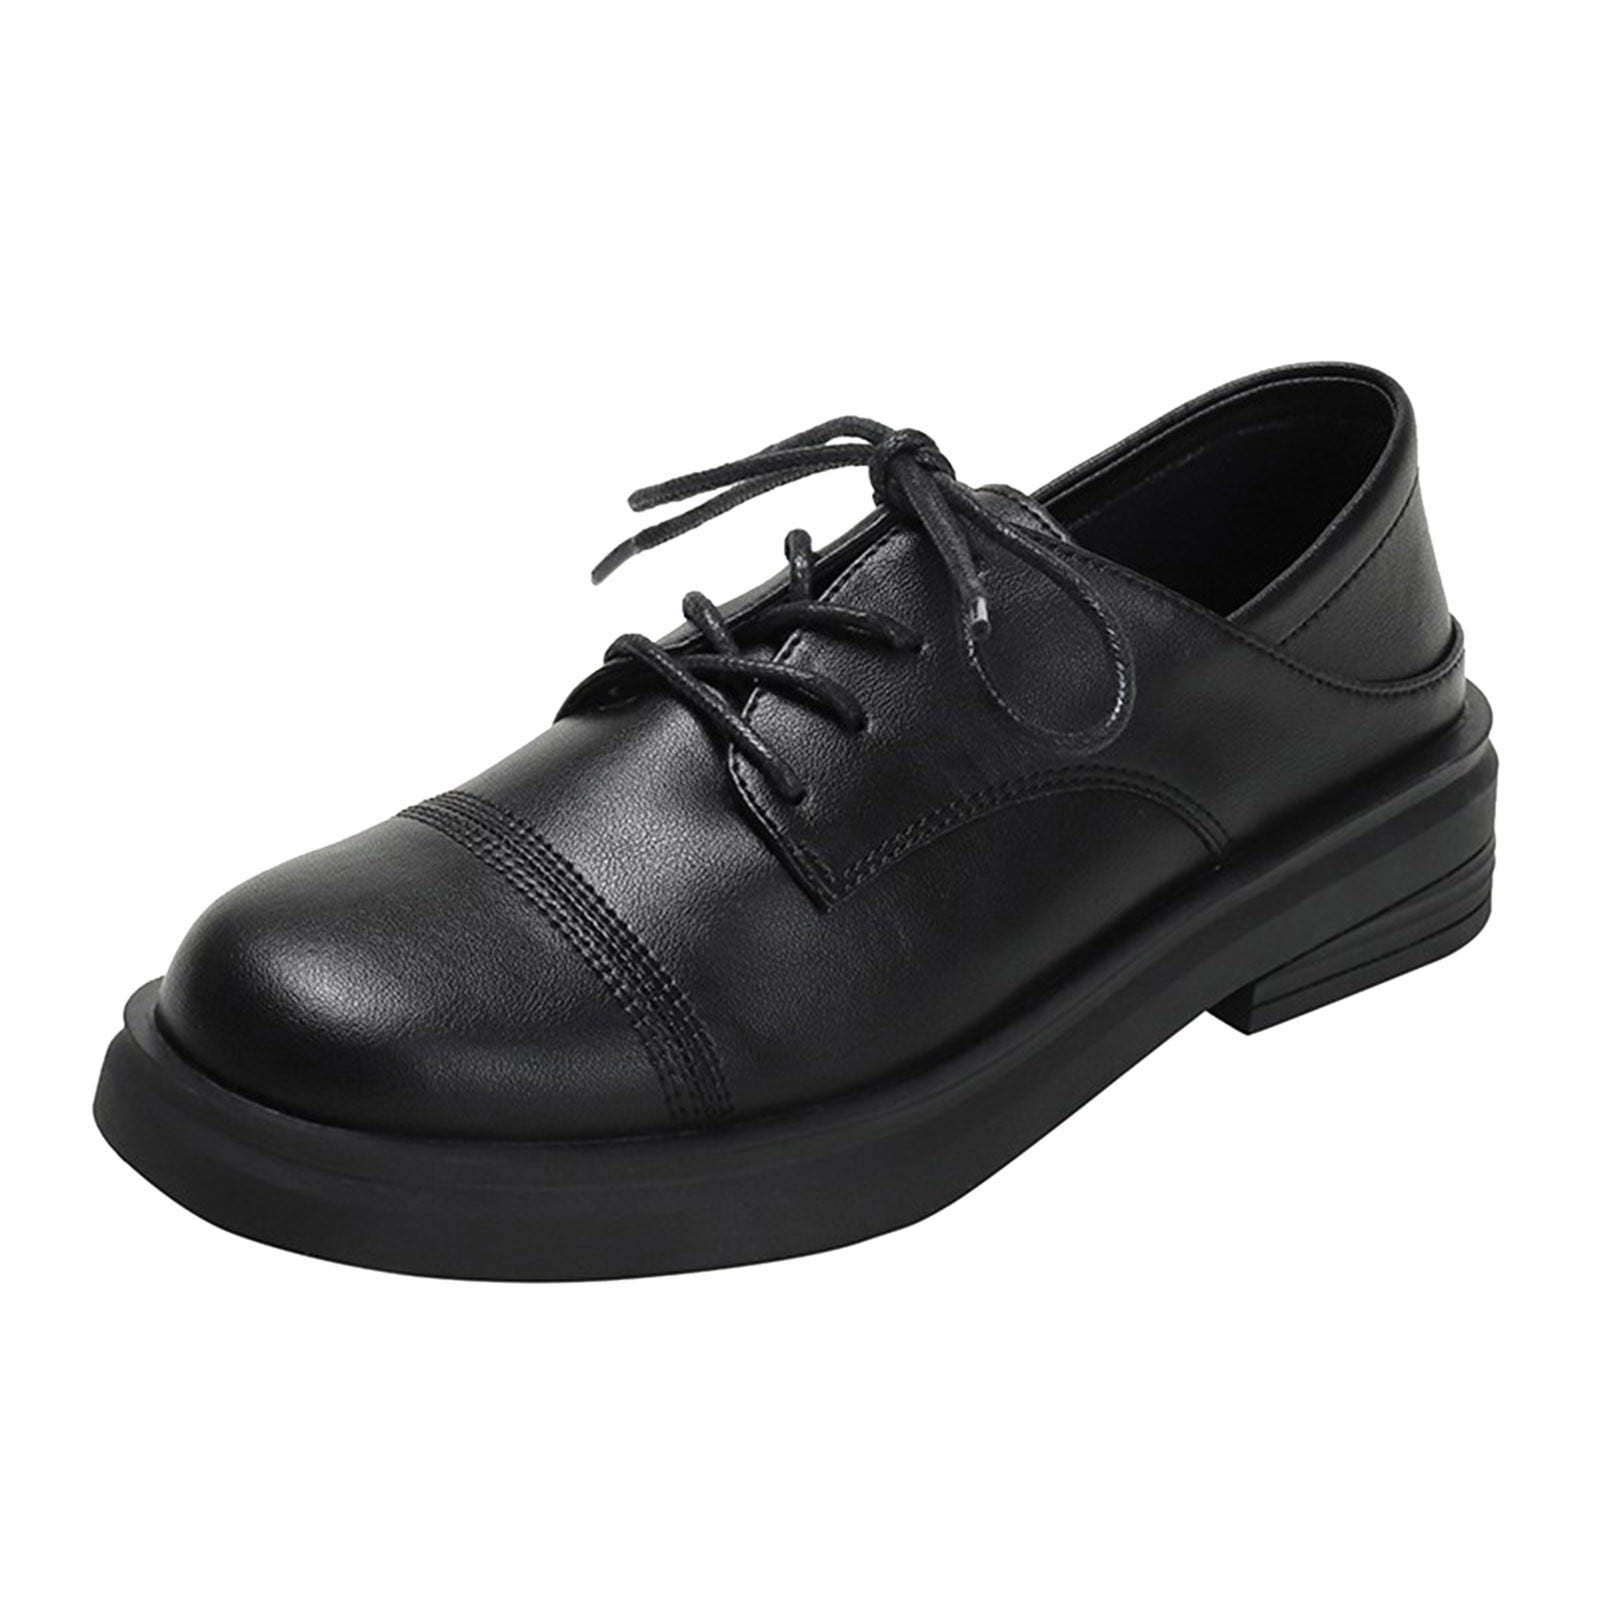 Shoes | Black Sexy Platform Heels Size 5 12 | Poshmark